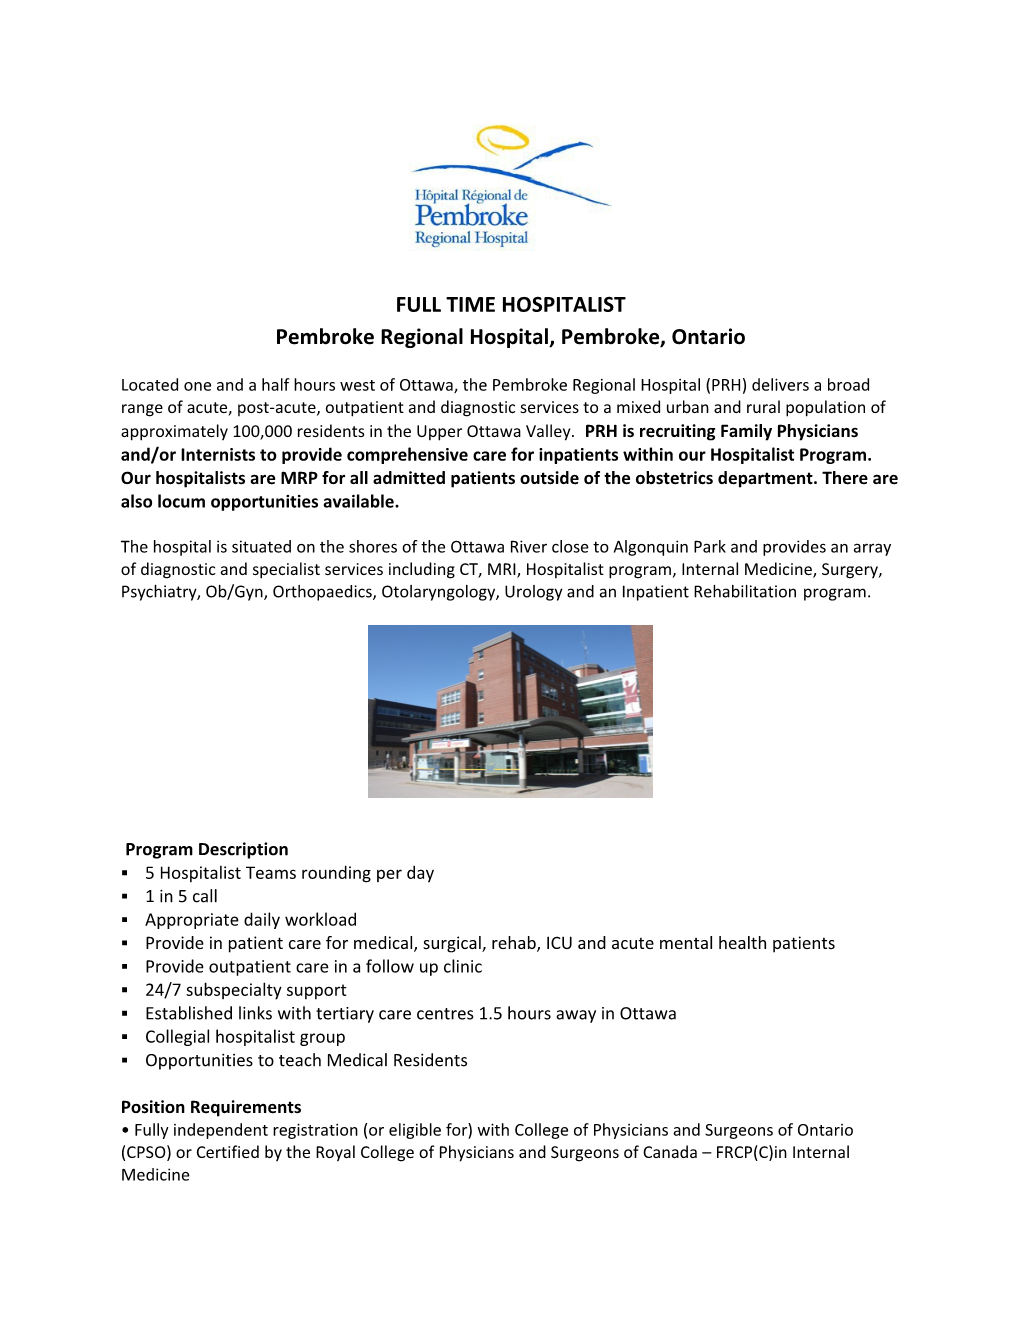 Pembroke Regional Hospital, Pembroke, Ontario